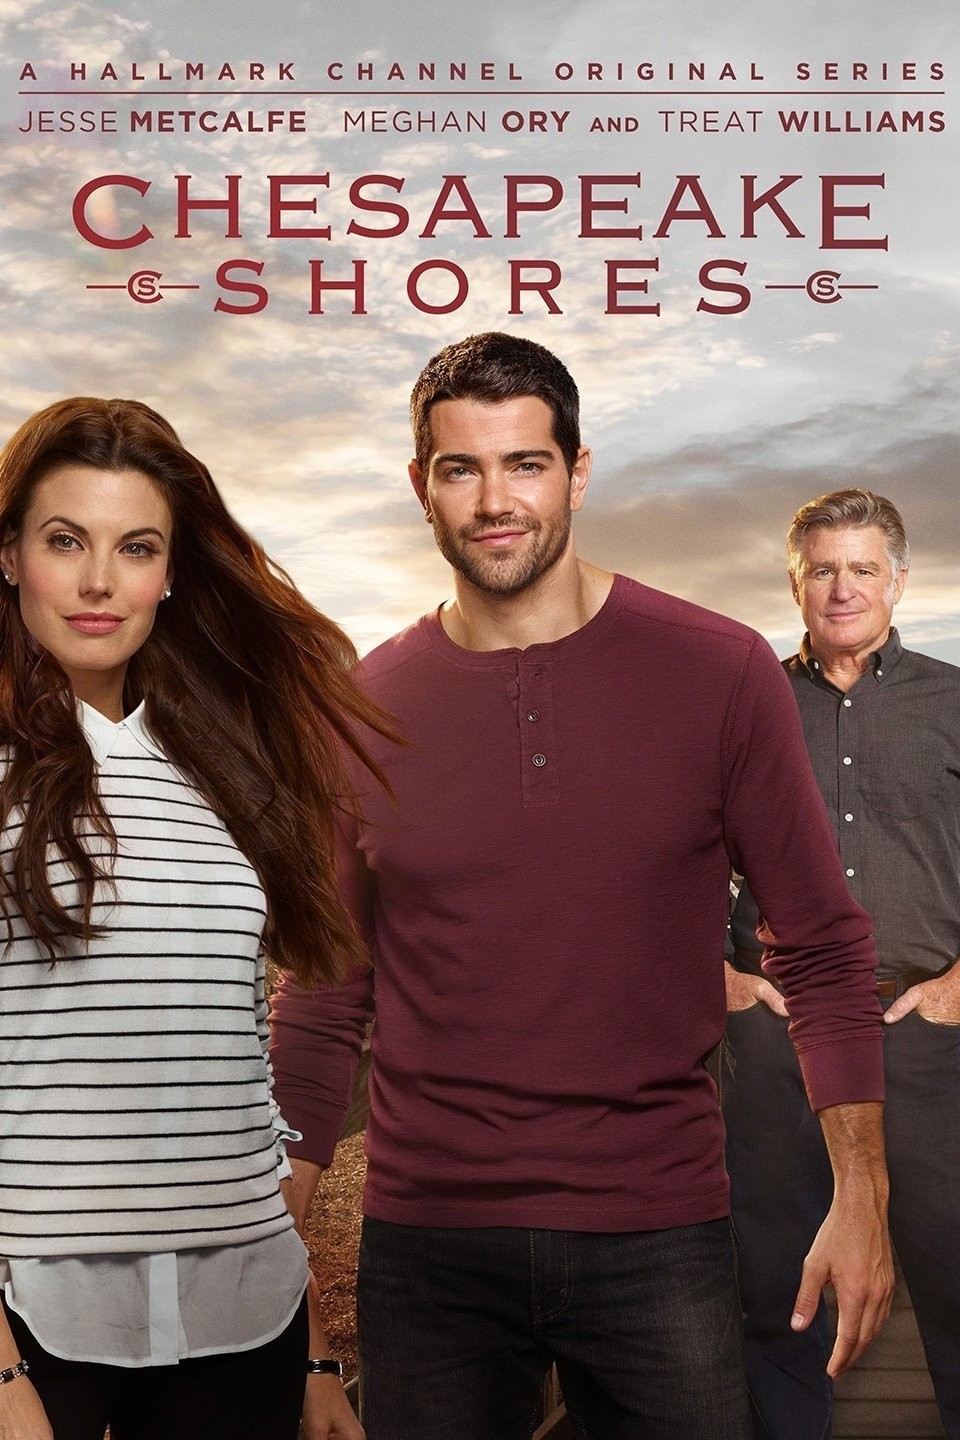 Chesapeake Shores Season 7 Teaser - Hallmark Channel, Meghan Ory